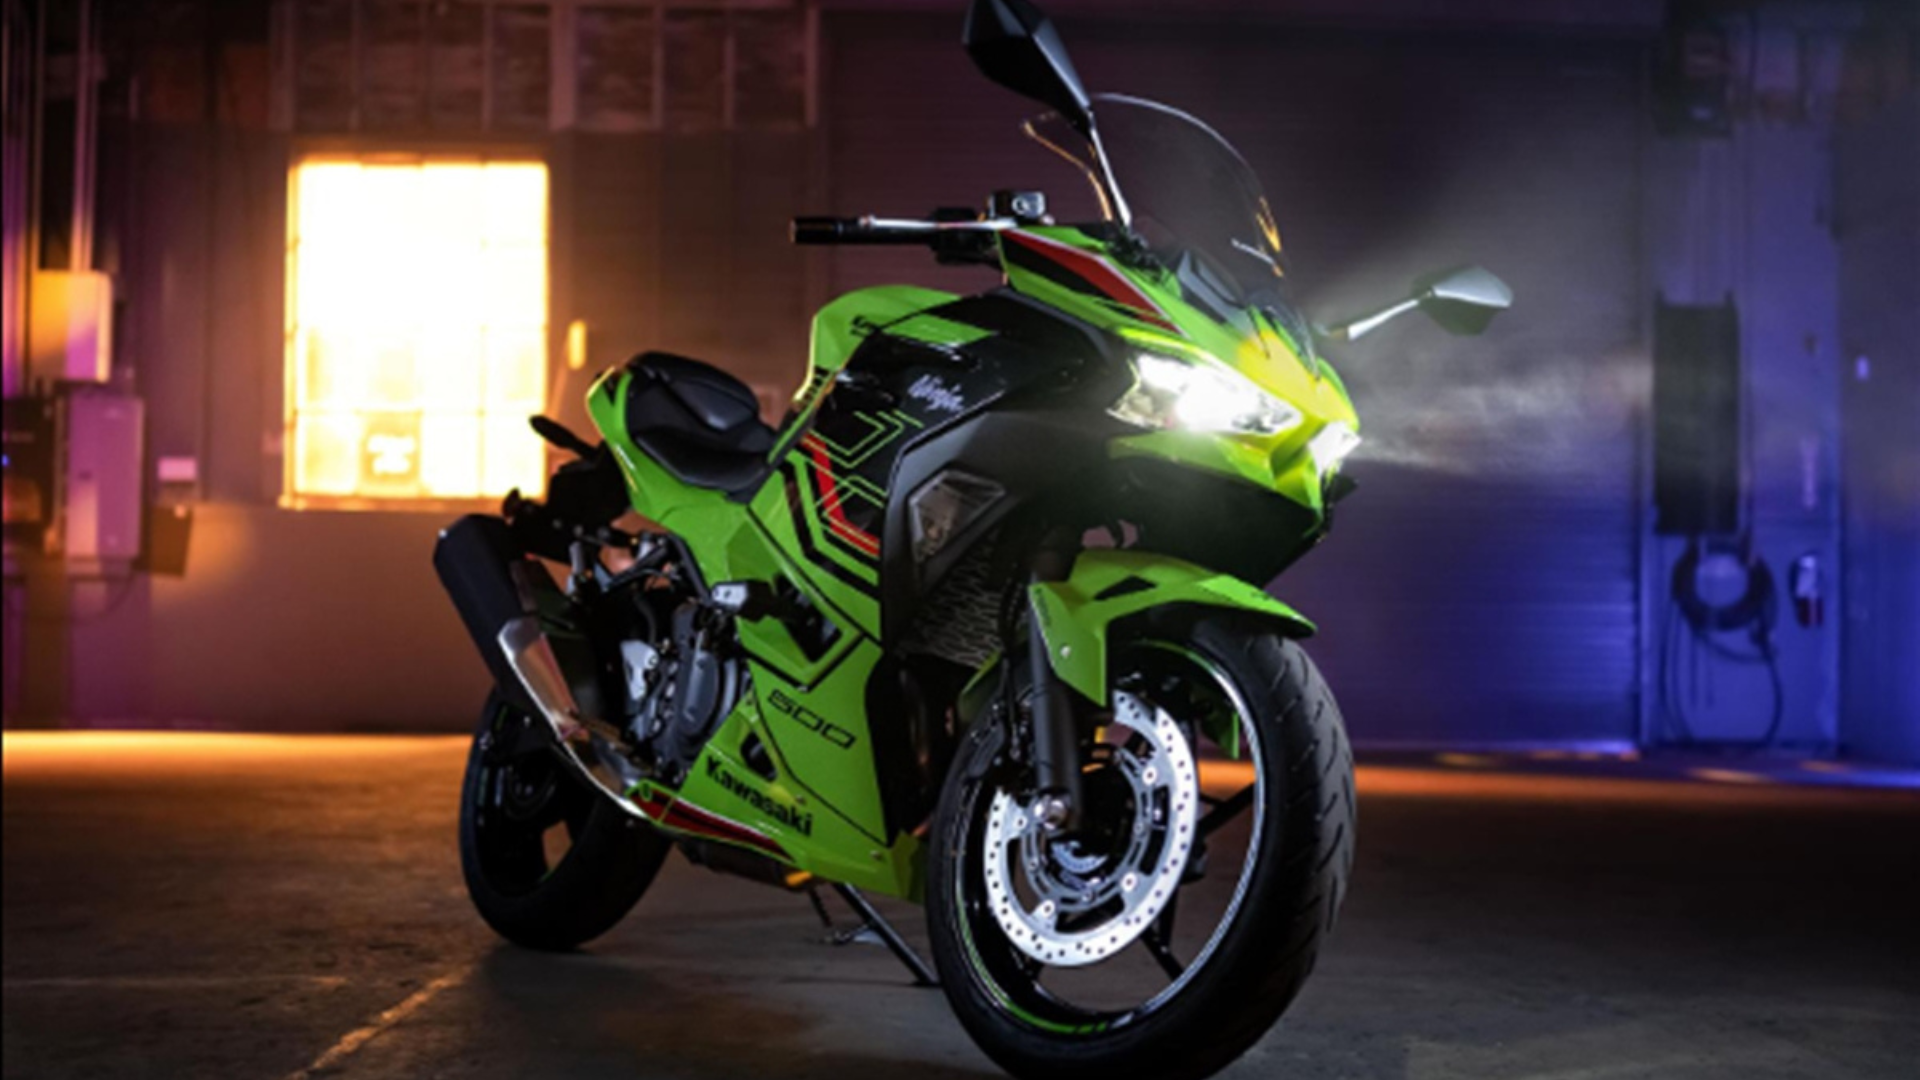 Ninja 500: Veja O Preço E Quando A Nova Kawasaki Chega No Brasil